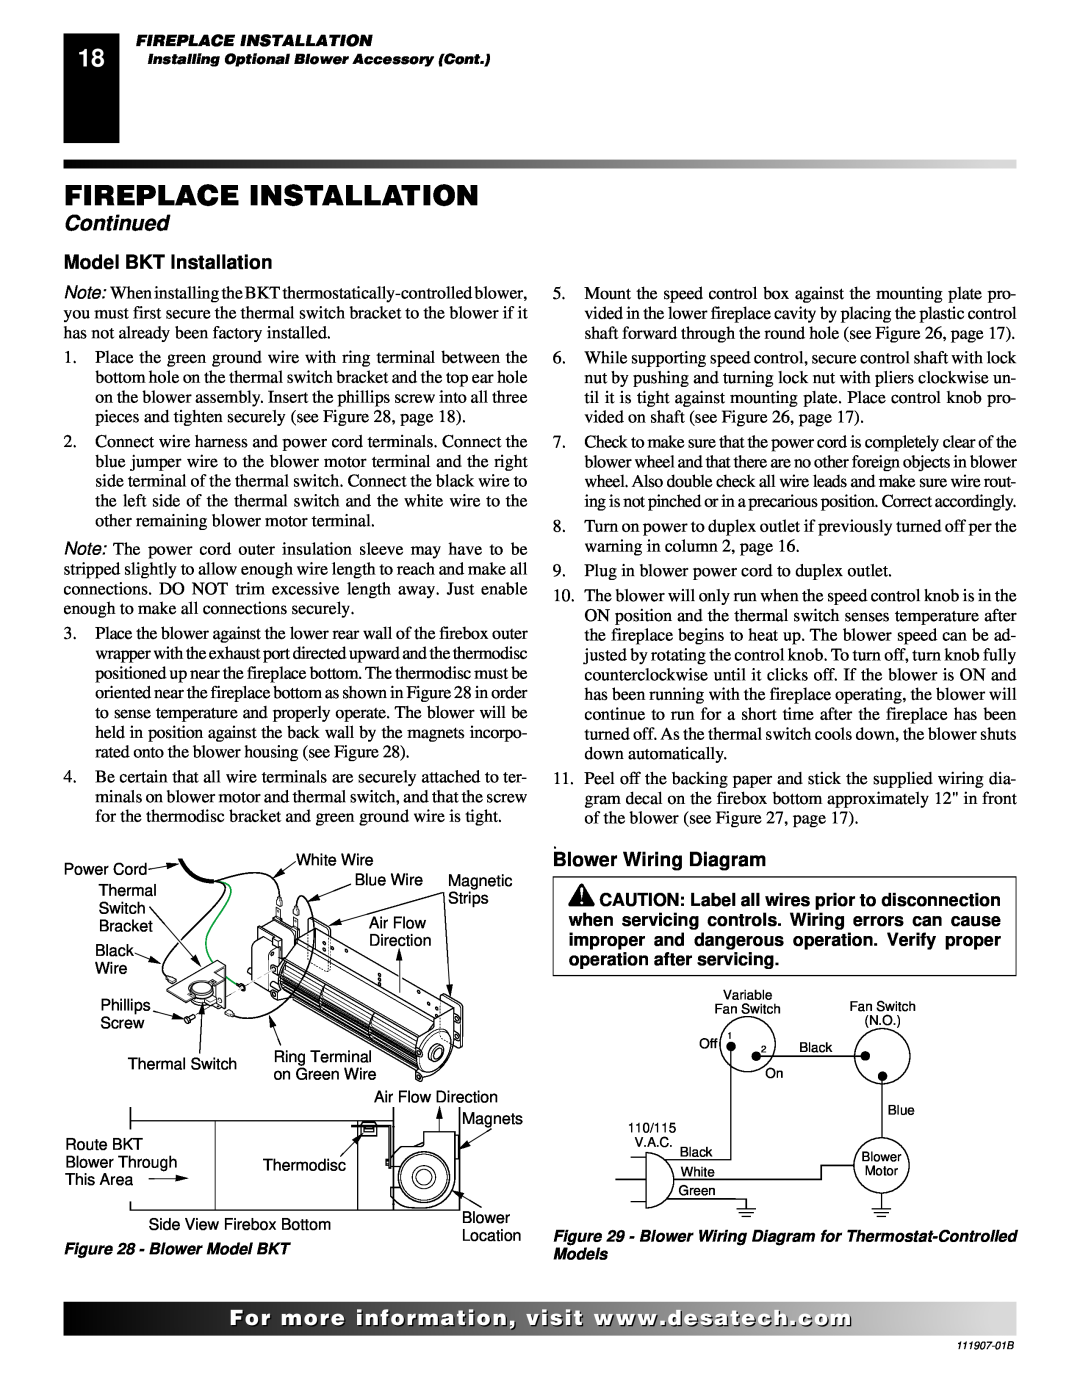 Desa V)V42EPA(1) SERIES, V)V42ENA(1) SERIES Model BKT Installation, Blower Wiring Diagram, Fireplace Installation 